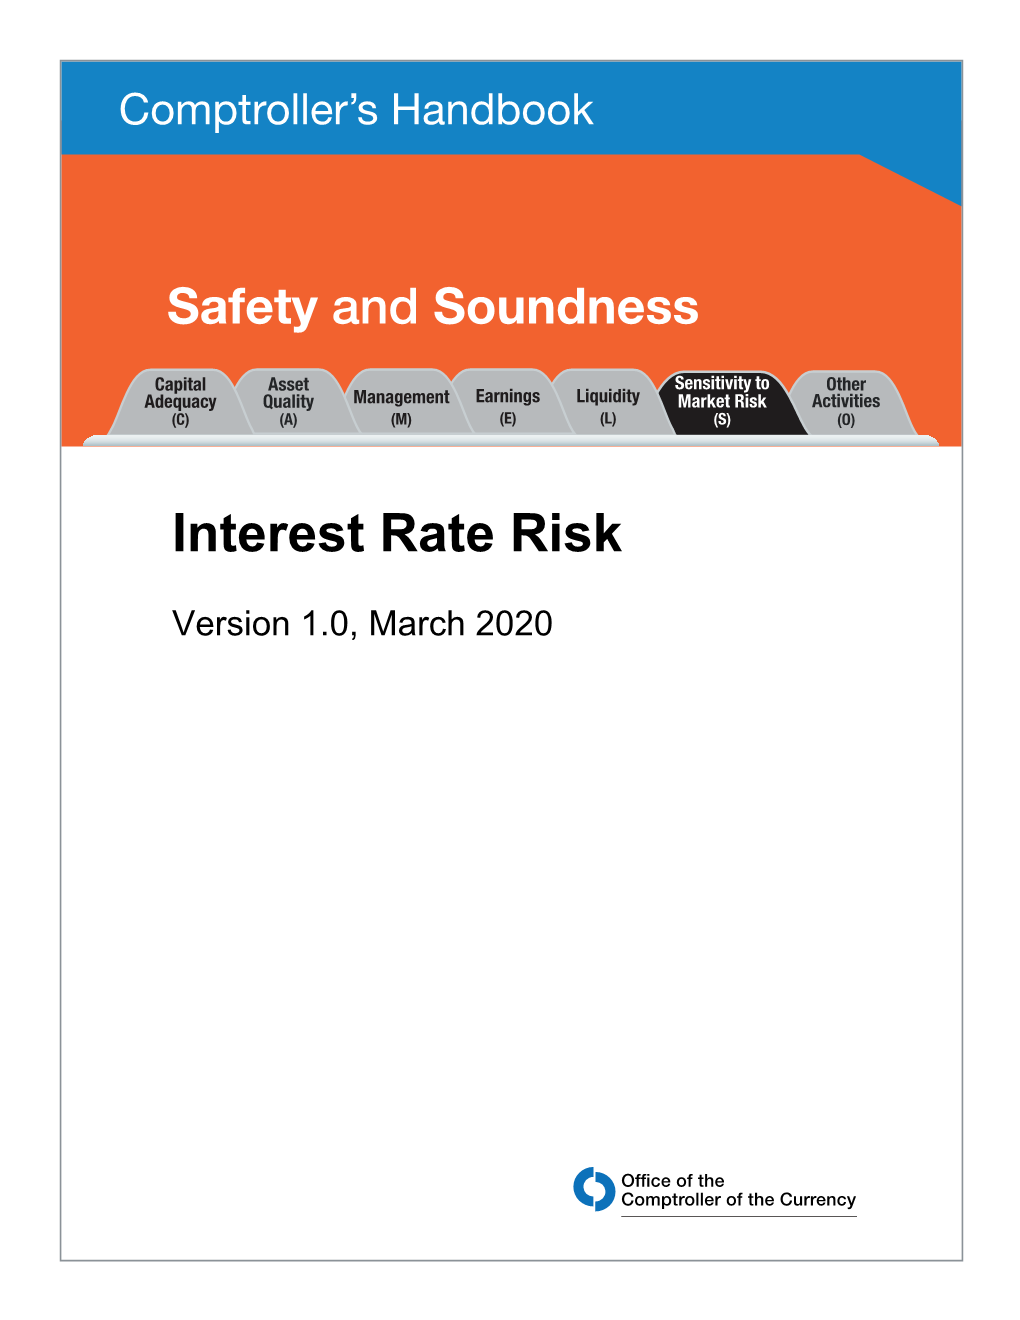 Interest Rate Risk, Comptroller's Handbook